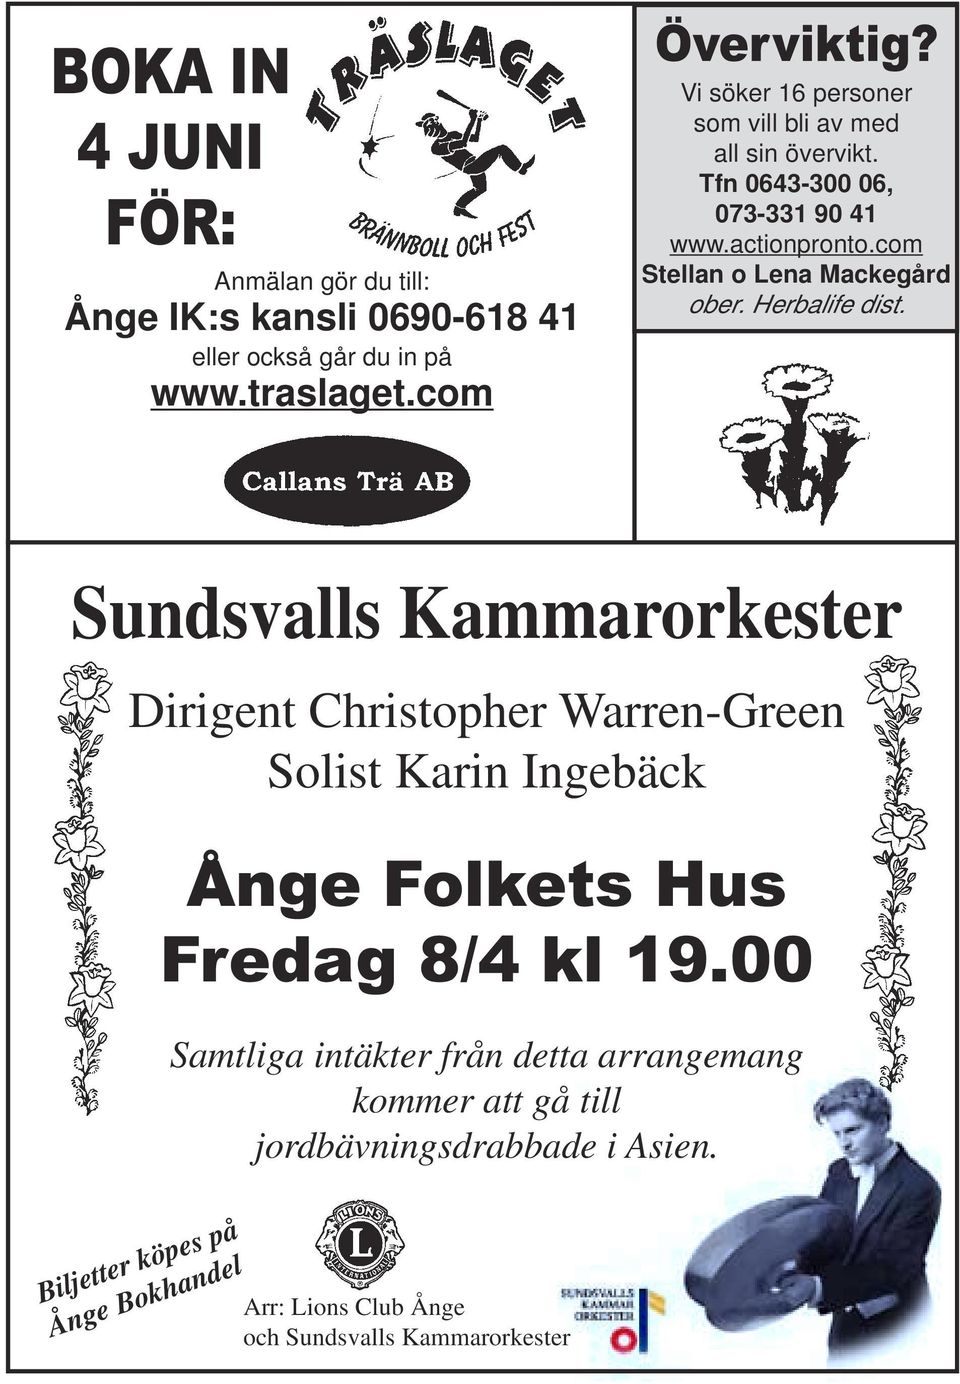 Herbalife dist. Sundsvalls Kammarorkester Dirigent Christopher Warren-Green Solist Karin Ingebäck Ånge Folkets Hus Fredag 8/4 kl 19.